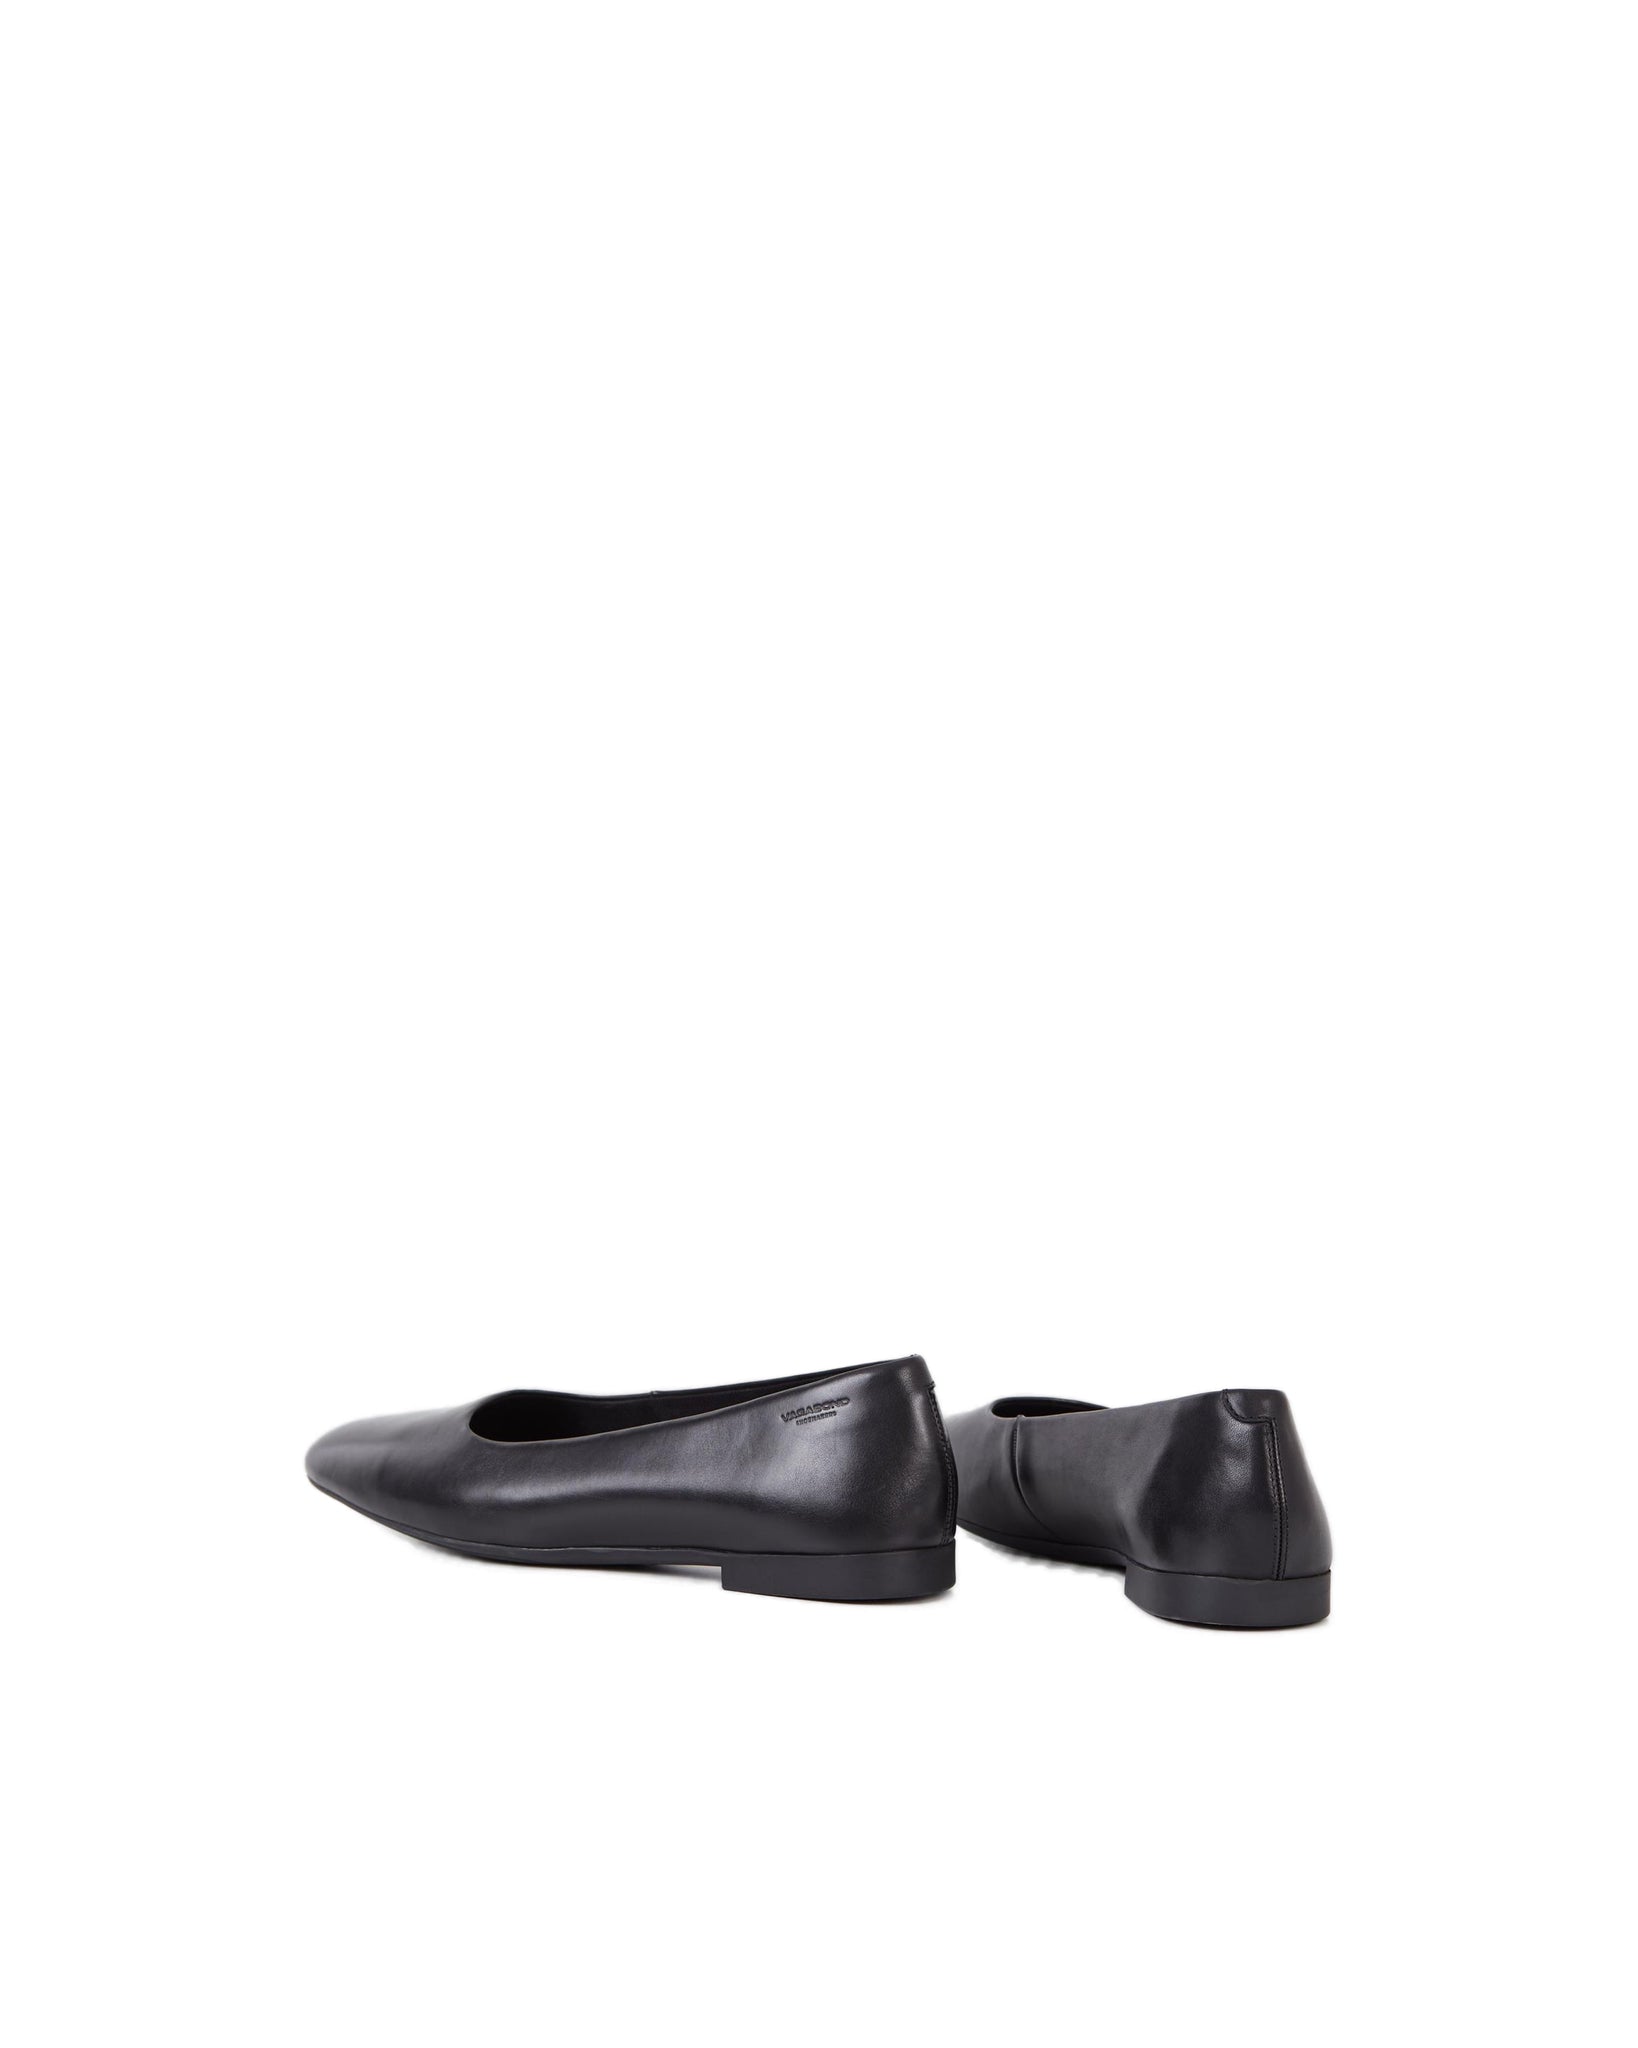 Chaussures Sibel (5758-201-20) - Noir